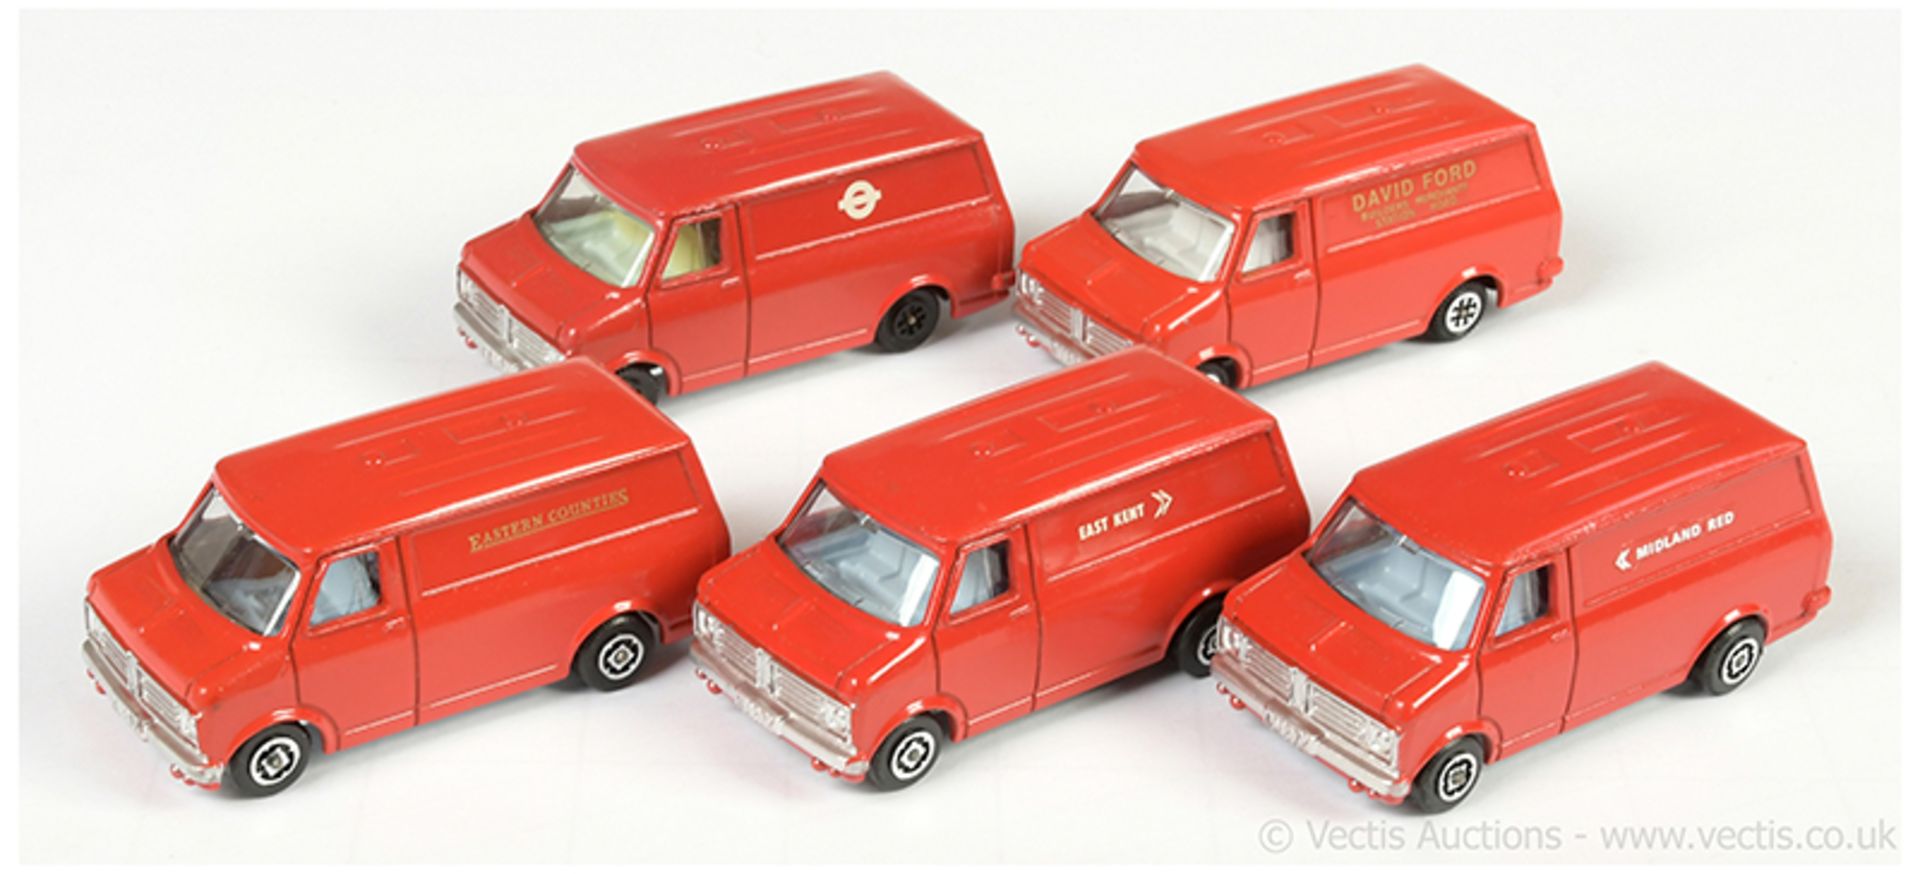 GRP inc Dinky 410 Promotional Bedford Vans